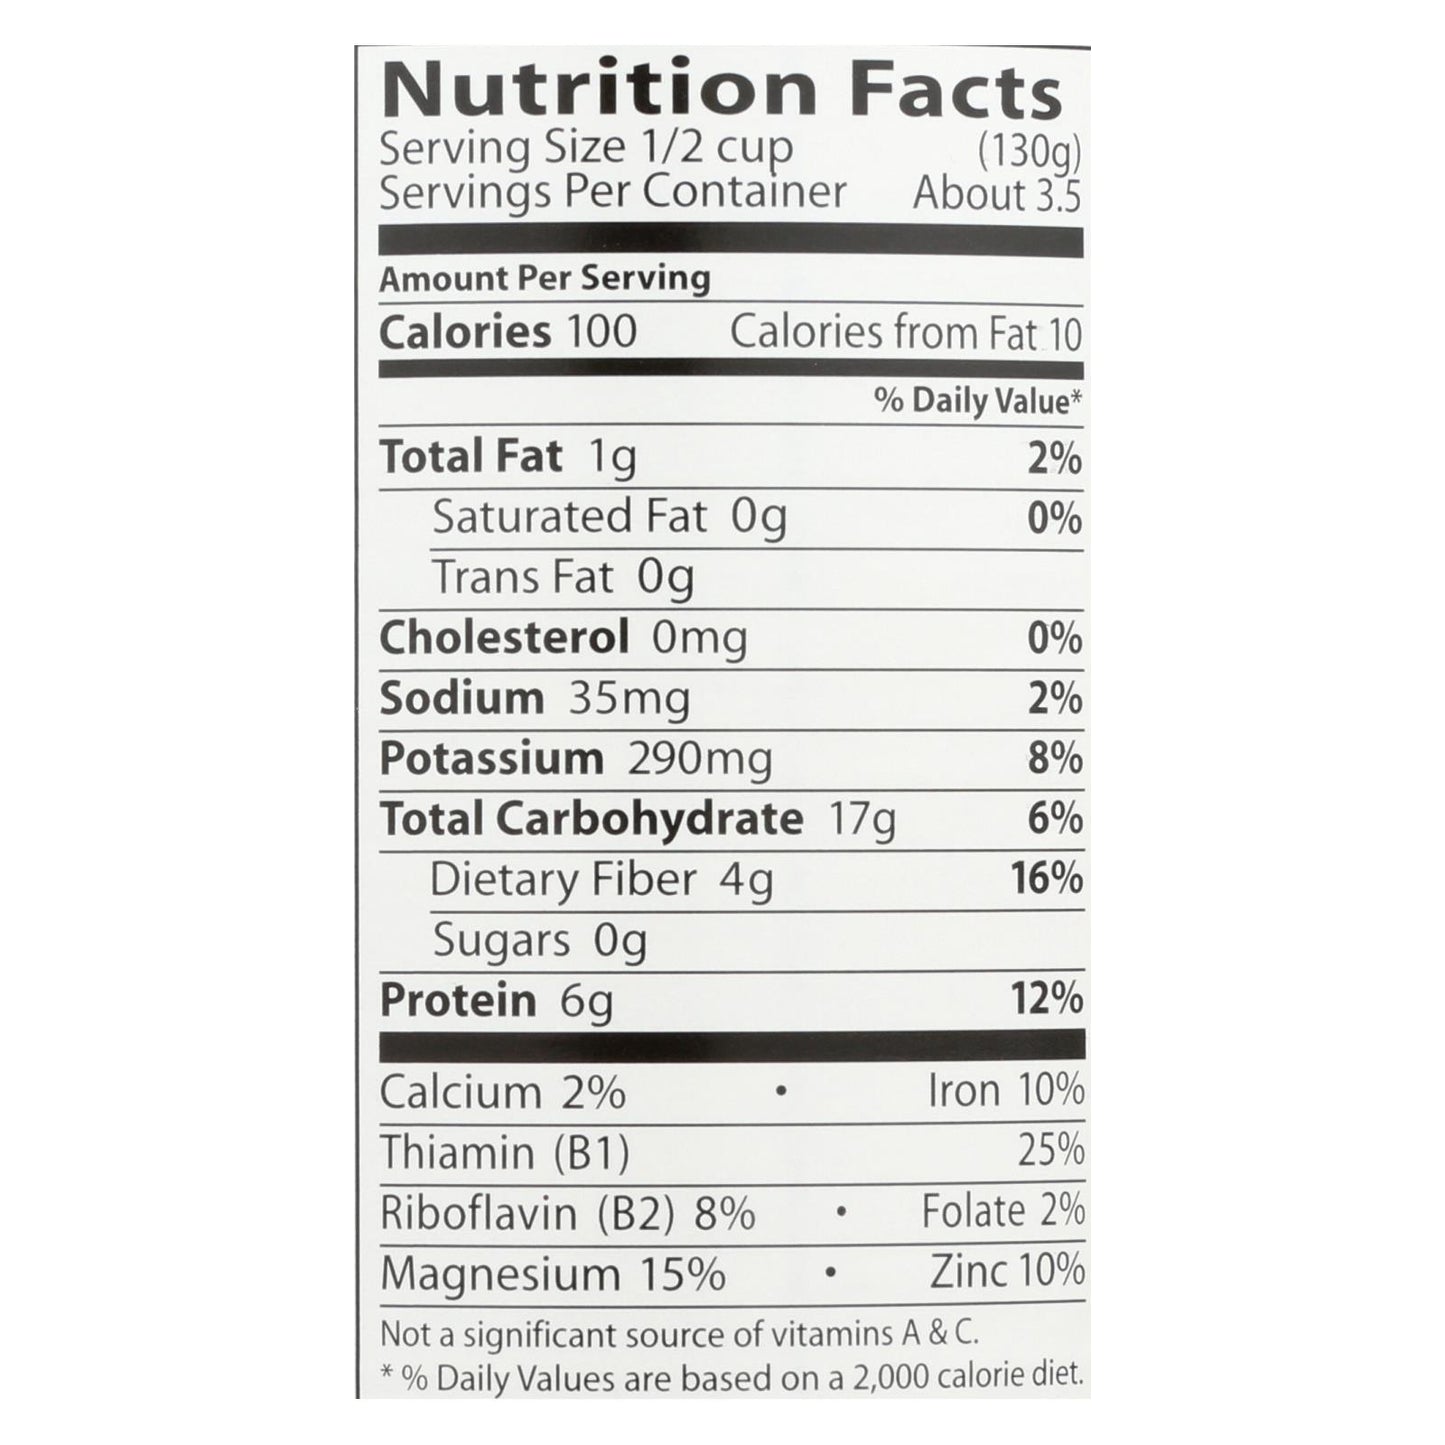 Eden Foods Butter Beans Organic - Case Of 12 - 15 Oz. - Loomini